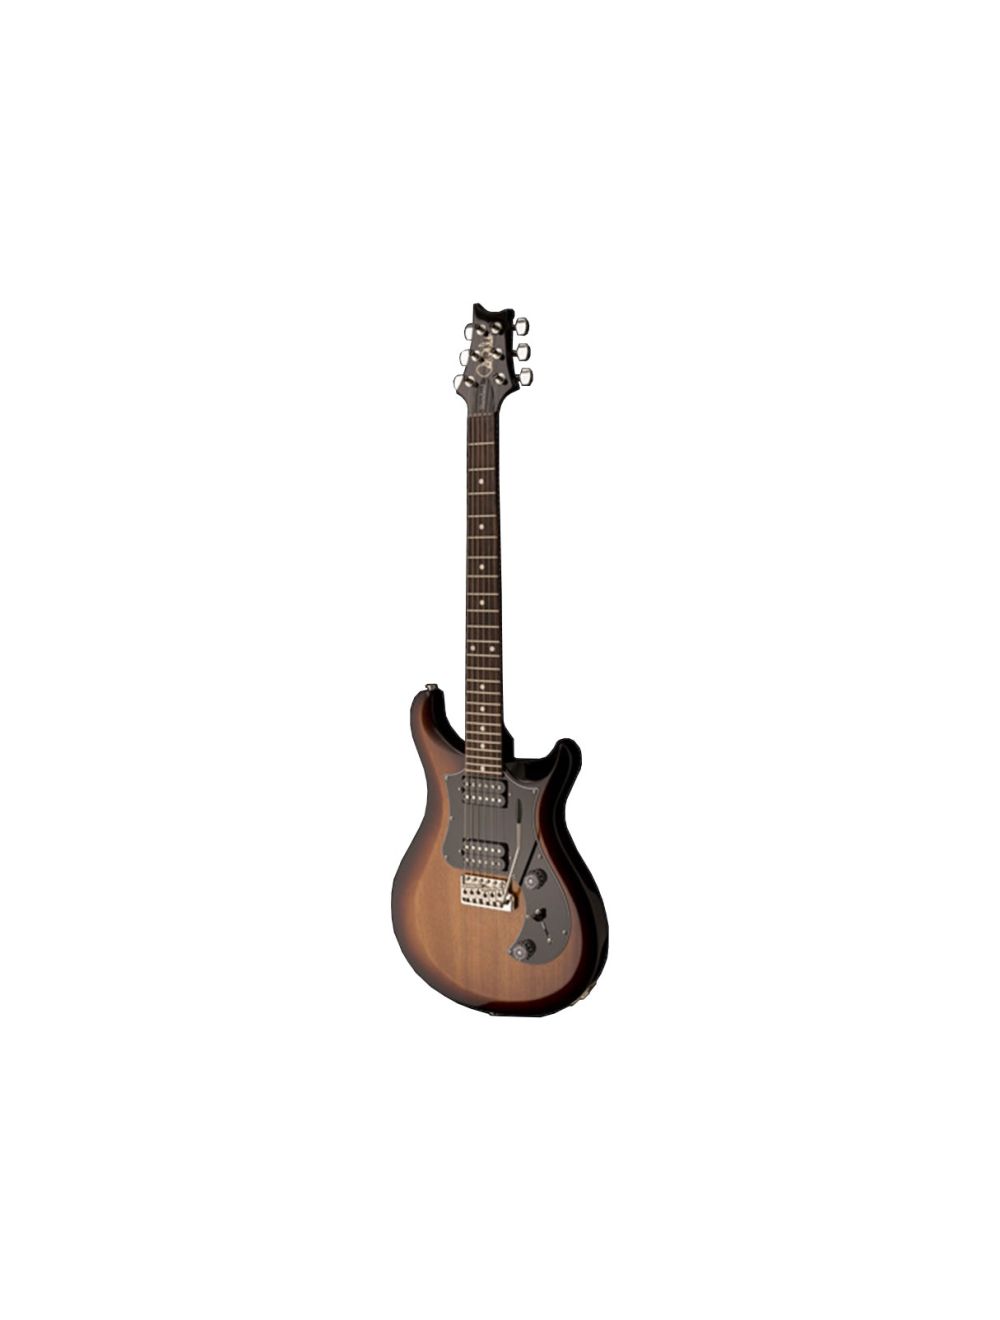 PRS S2 Standard 24 Guitar - McCarty Tobacco Sunburst $1150